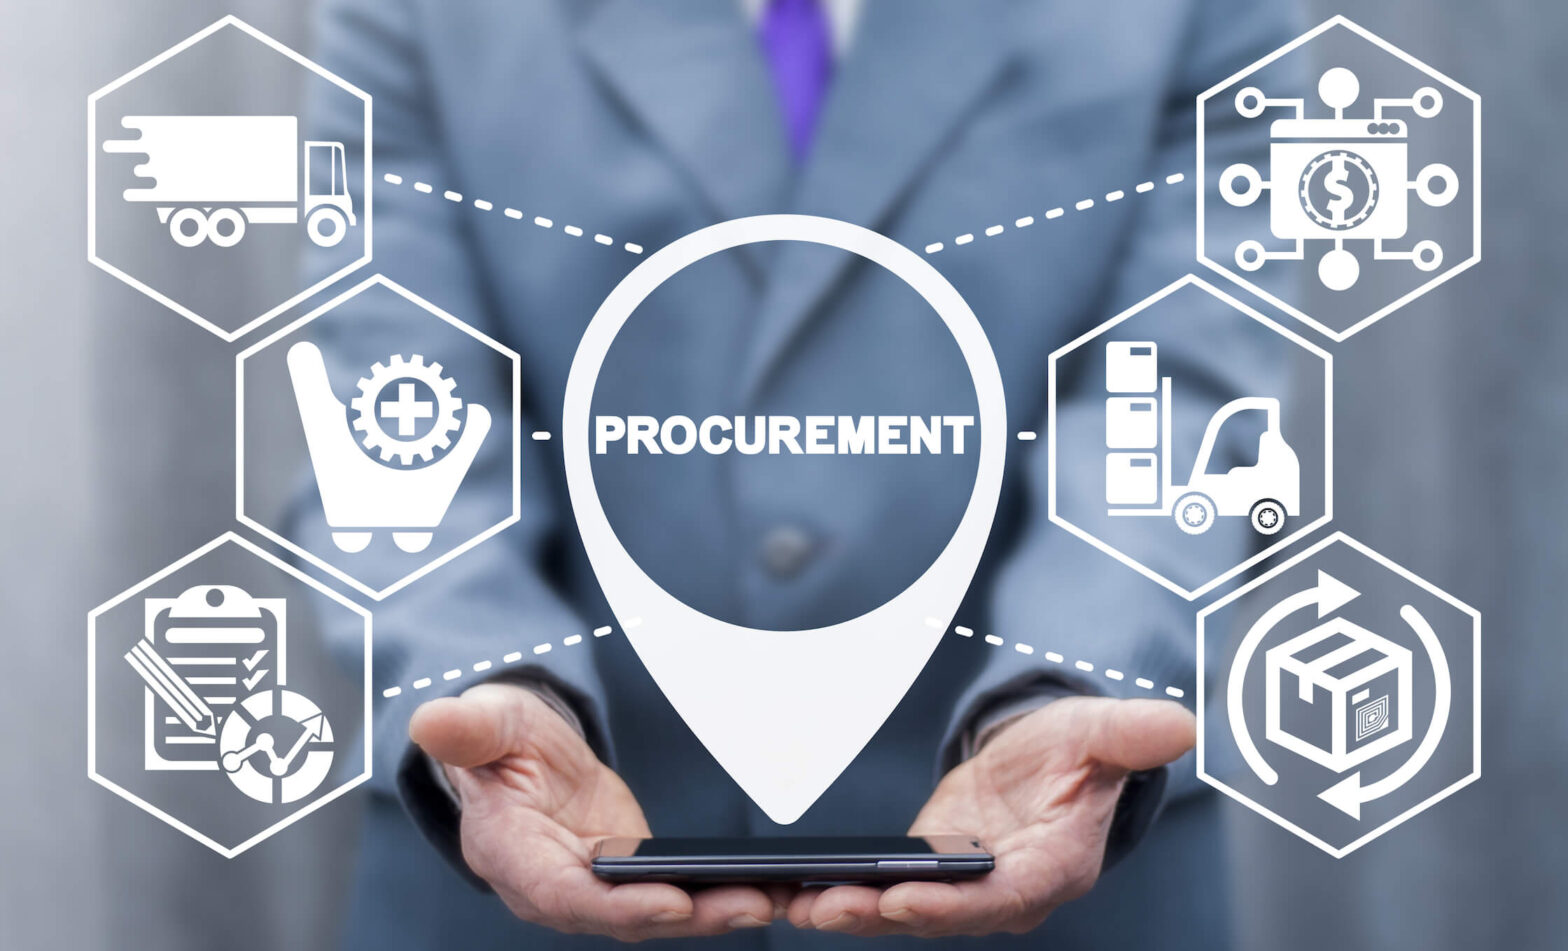 Best Practices & Software to Optimize the Procurement Process